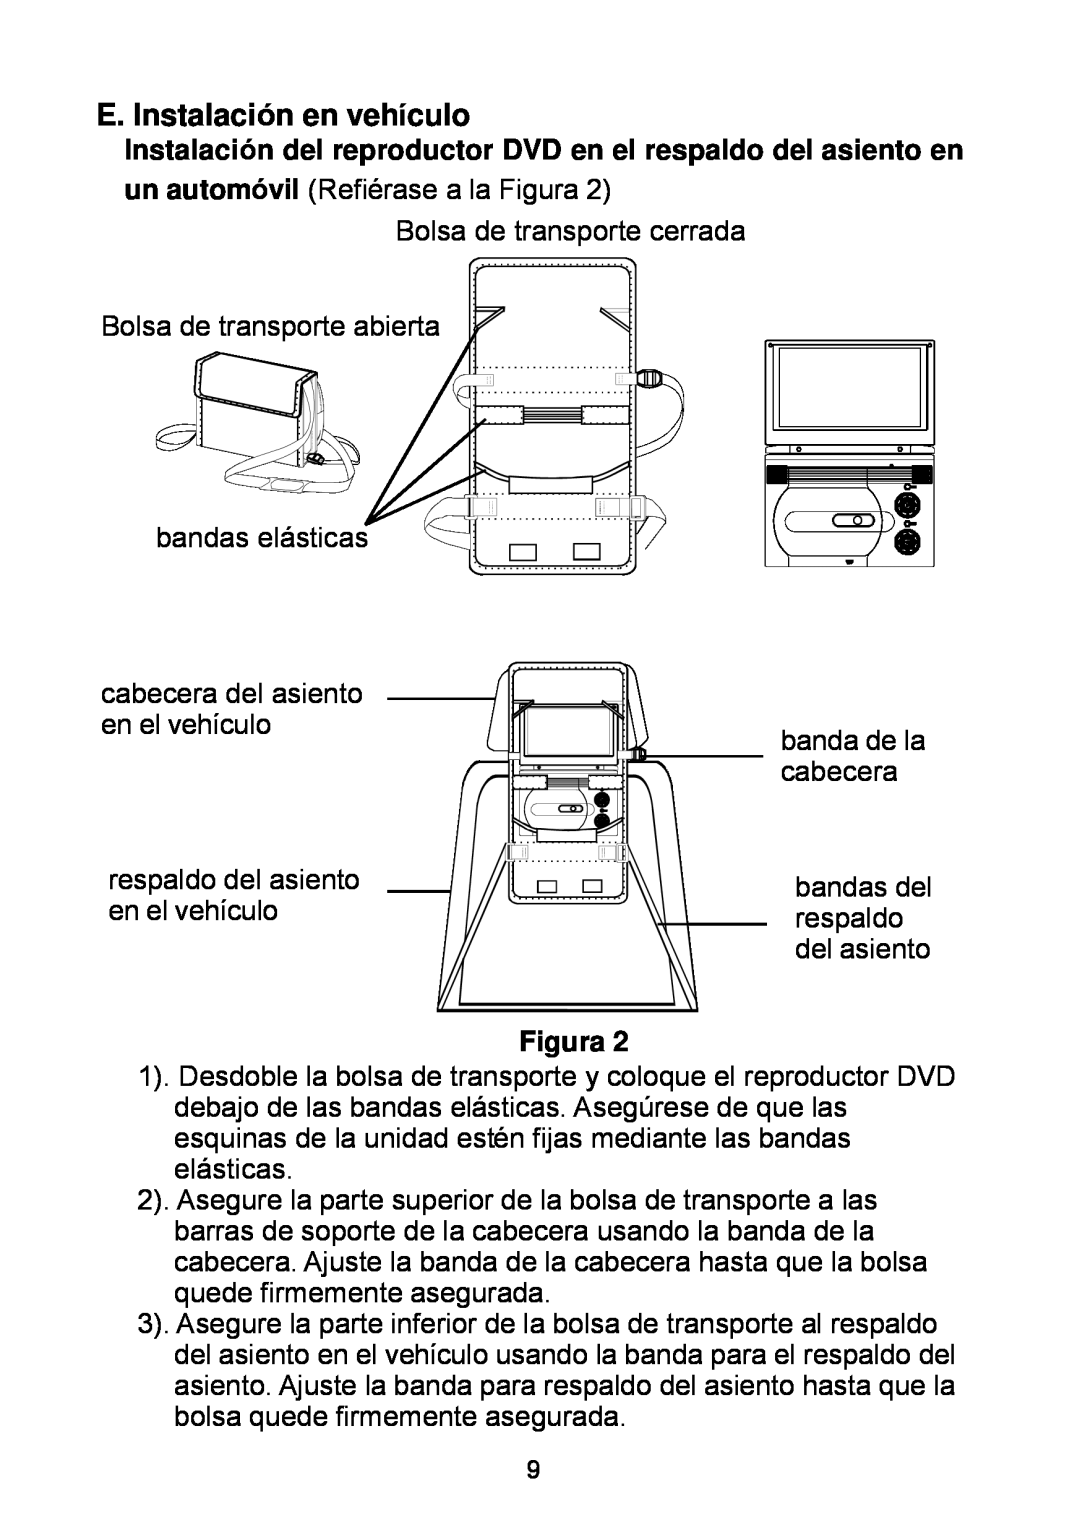 Audiovox D1929B manual E. Instalación en vehículo, Figura 